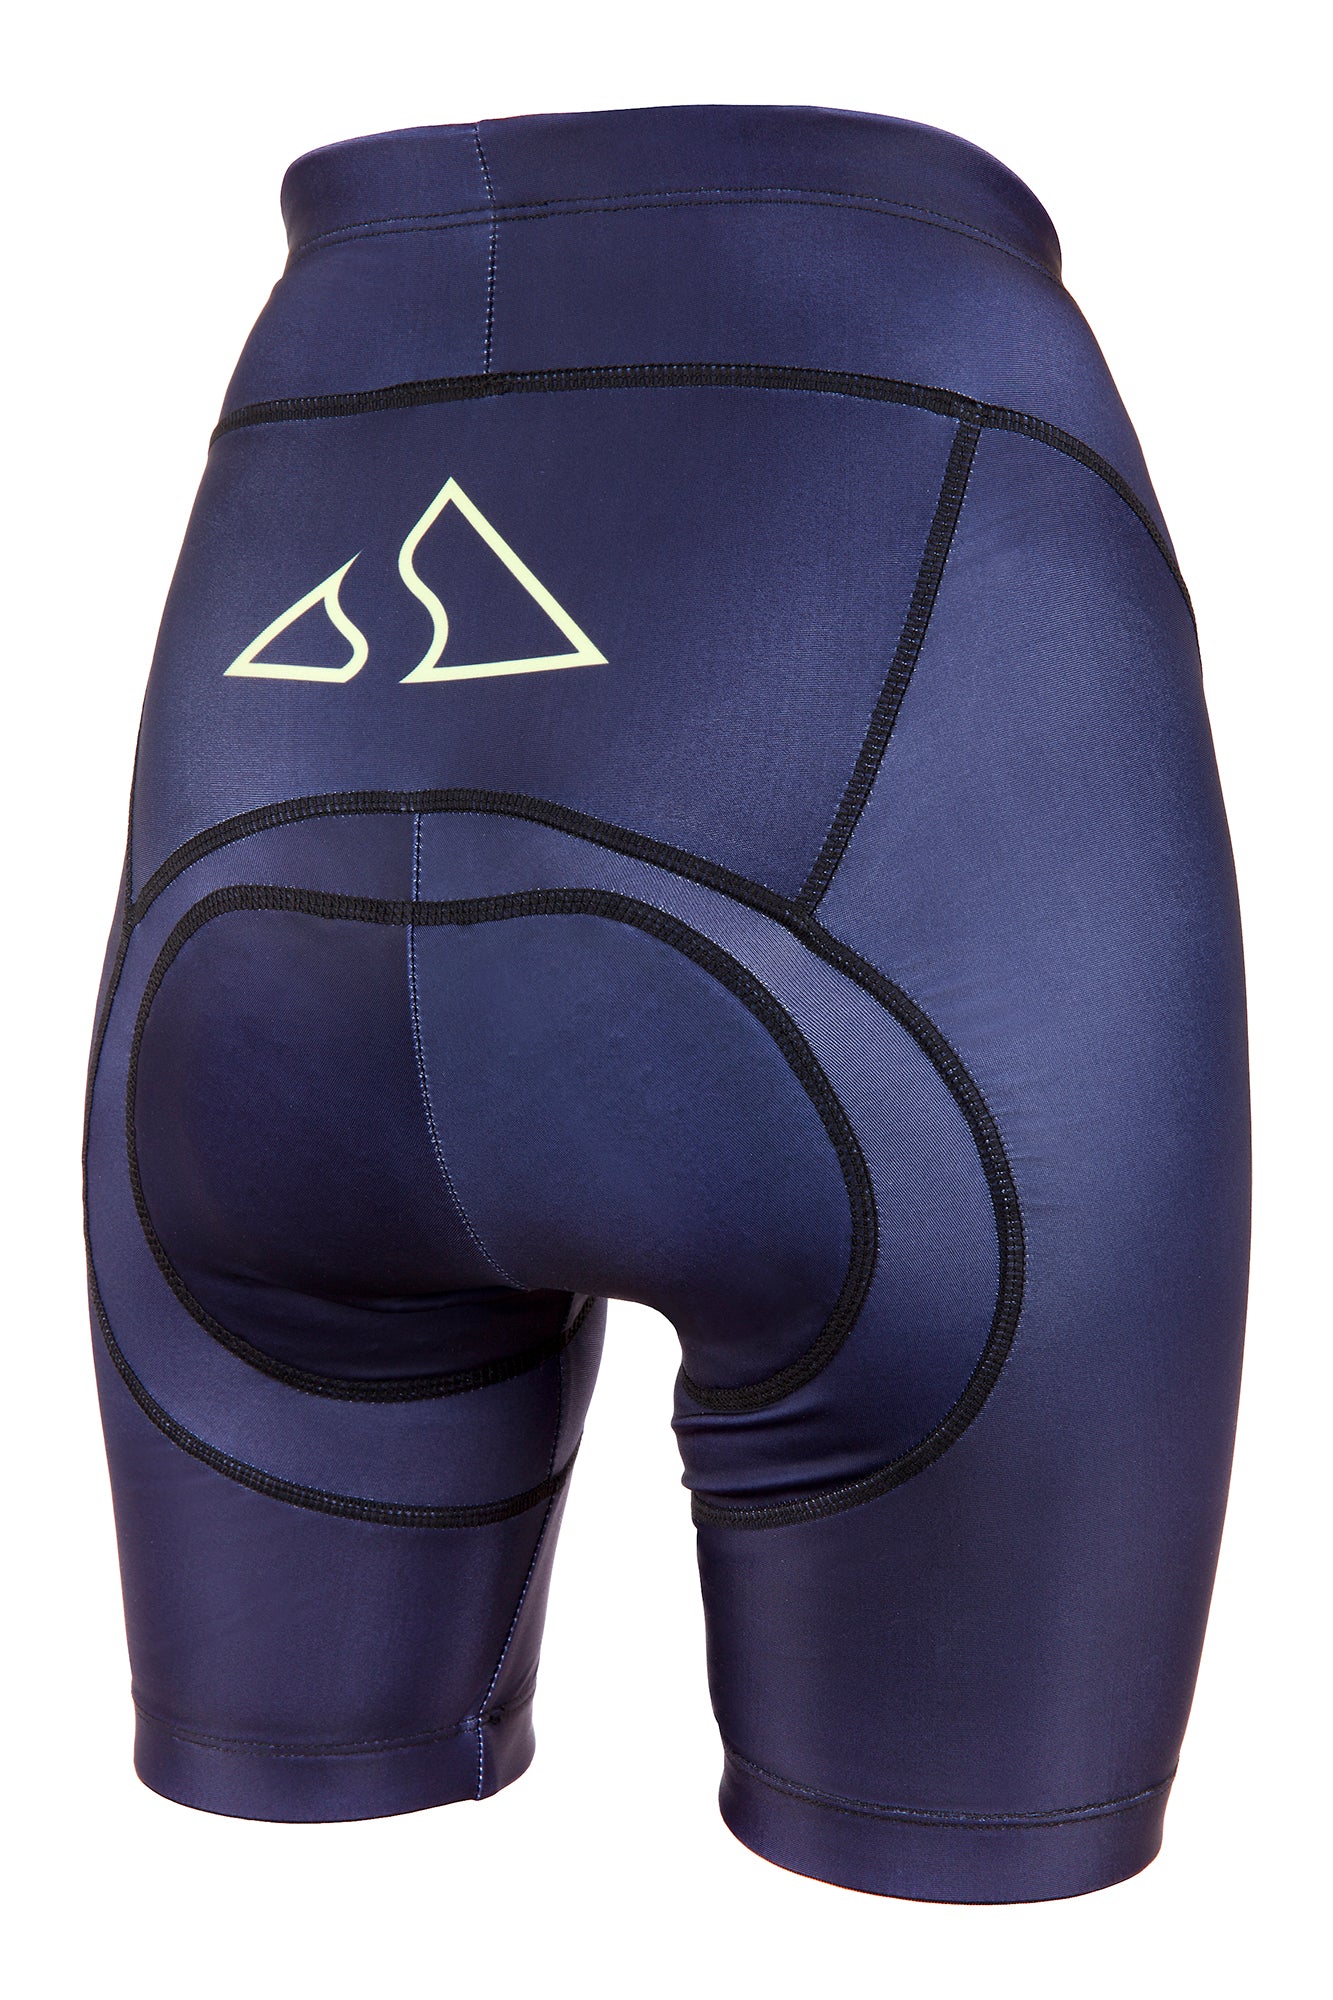 Women's Mountain Bike Shorts & Pants - MTB Shorts by Patagonia